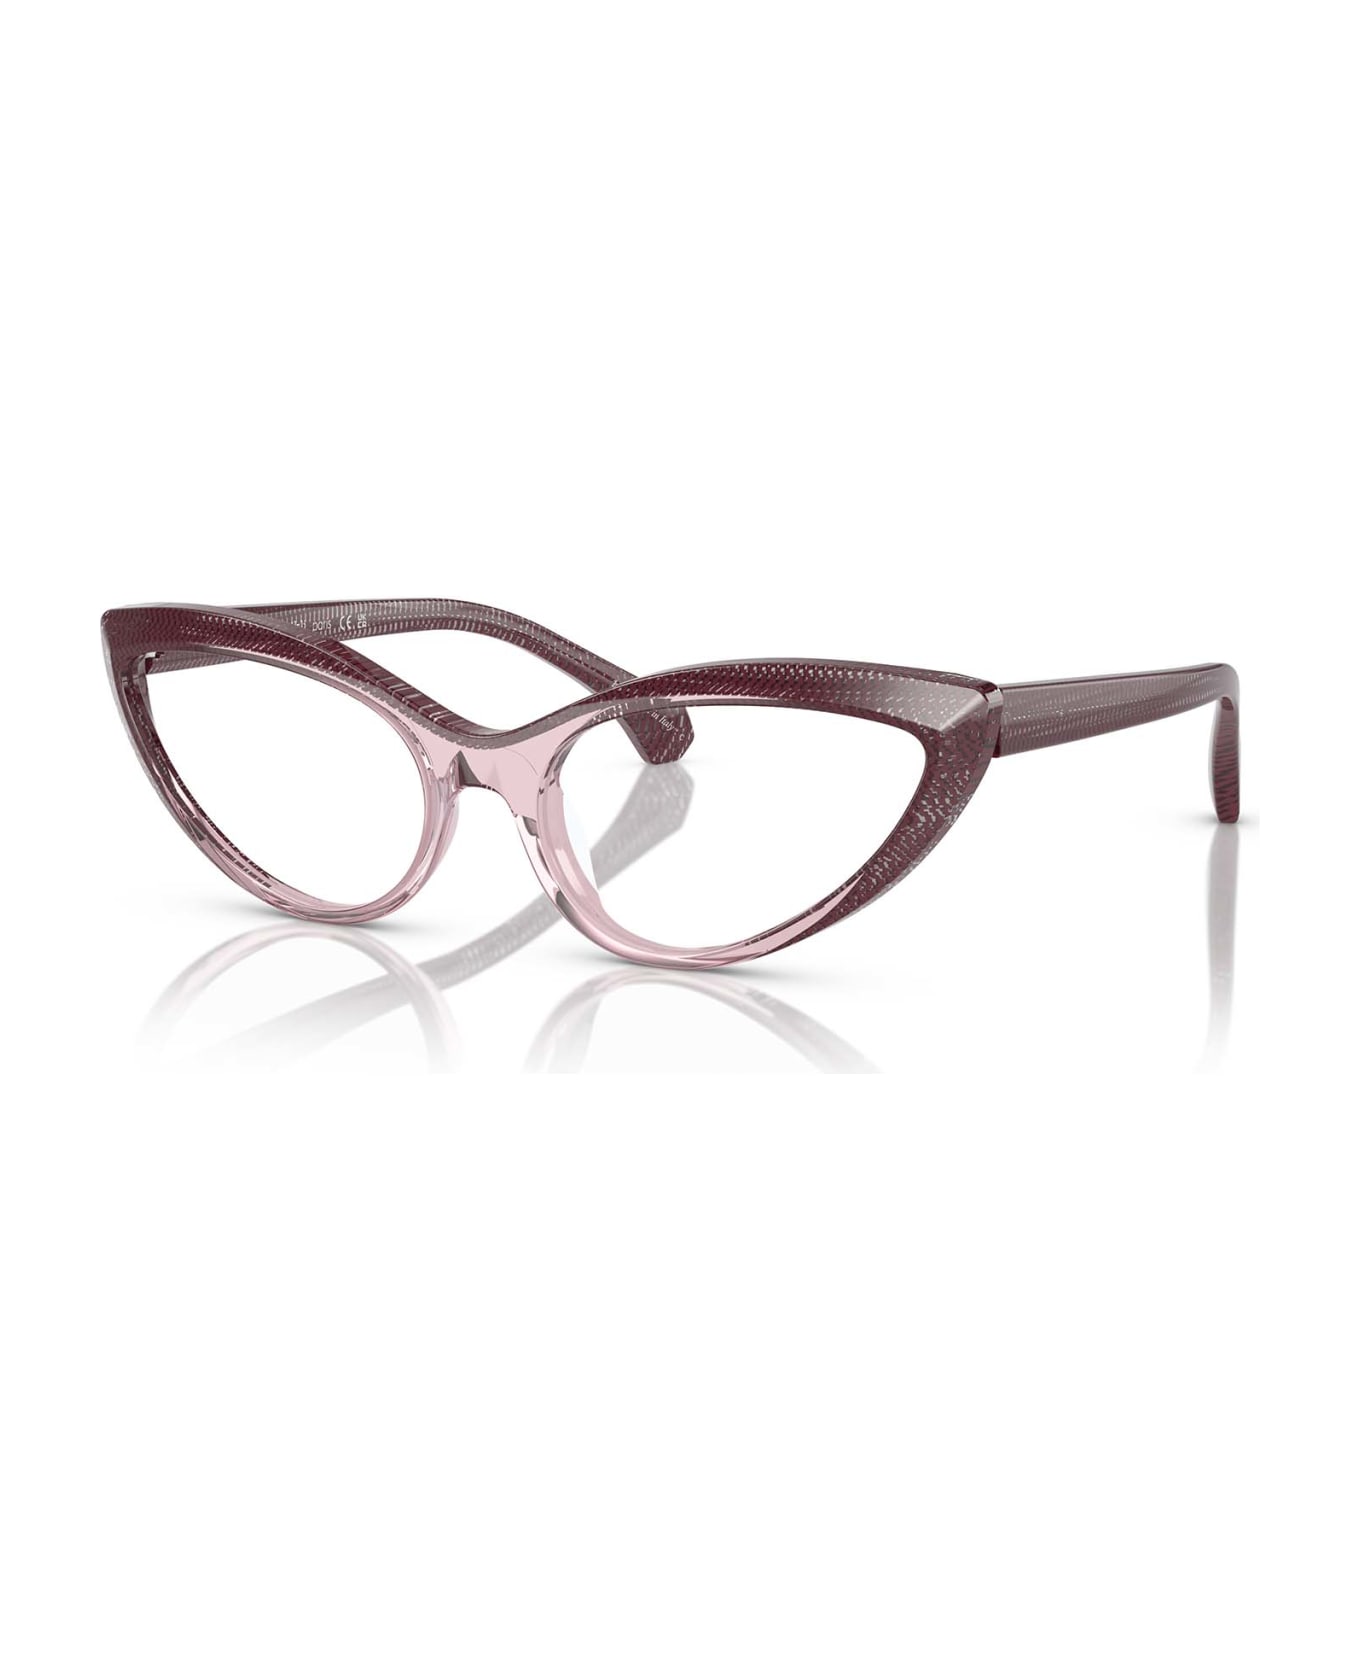 Alain Mikli A03503 Pink/pointille Boudreax Glasses - Pink/Pointille Boudreax